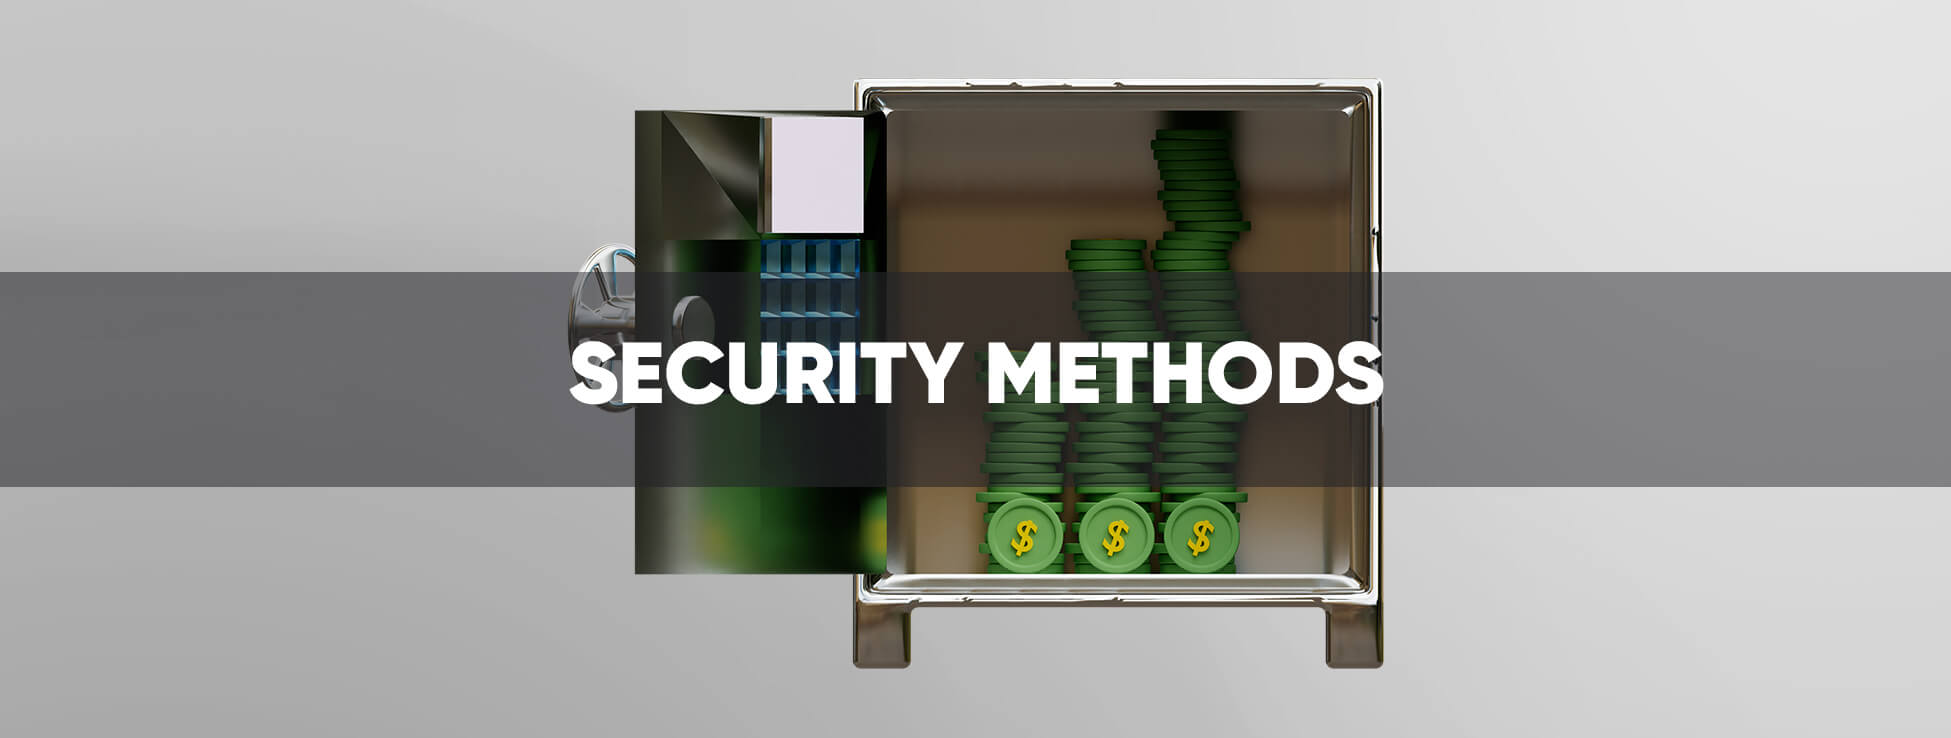 Security methods